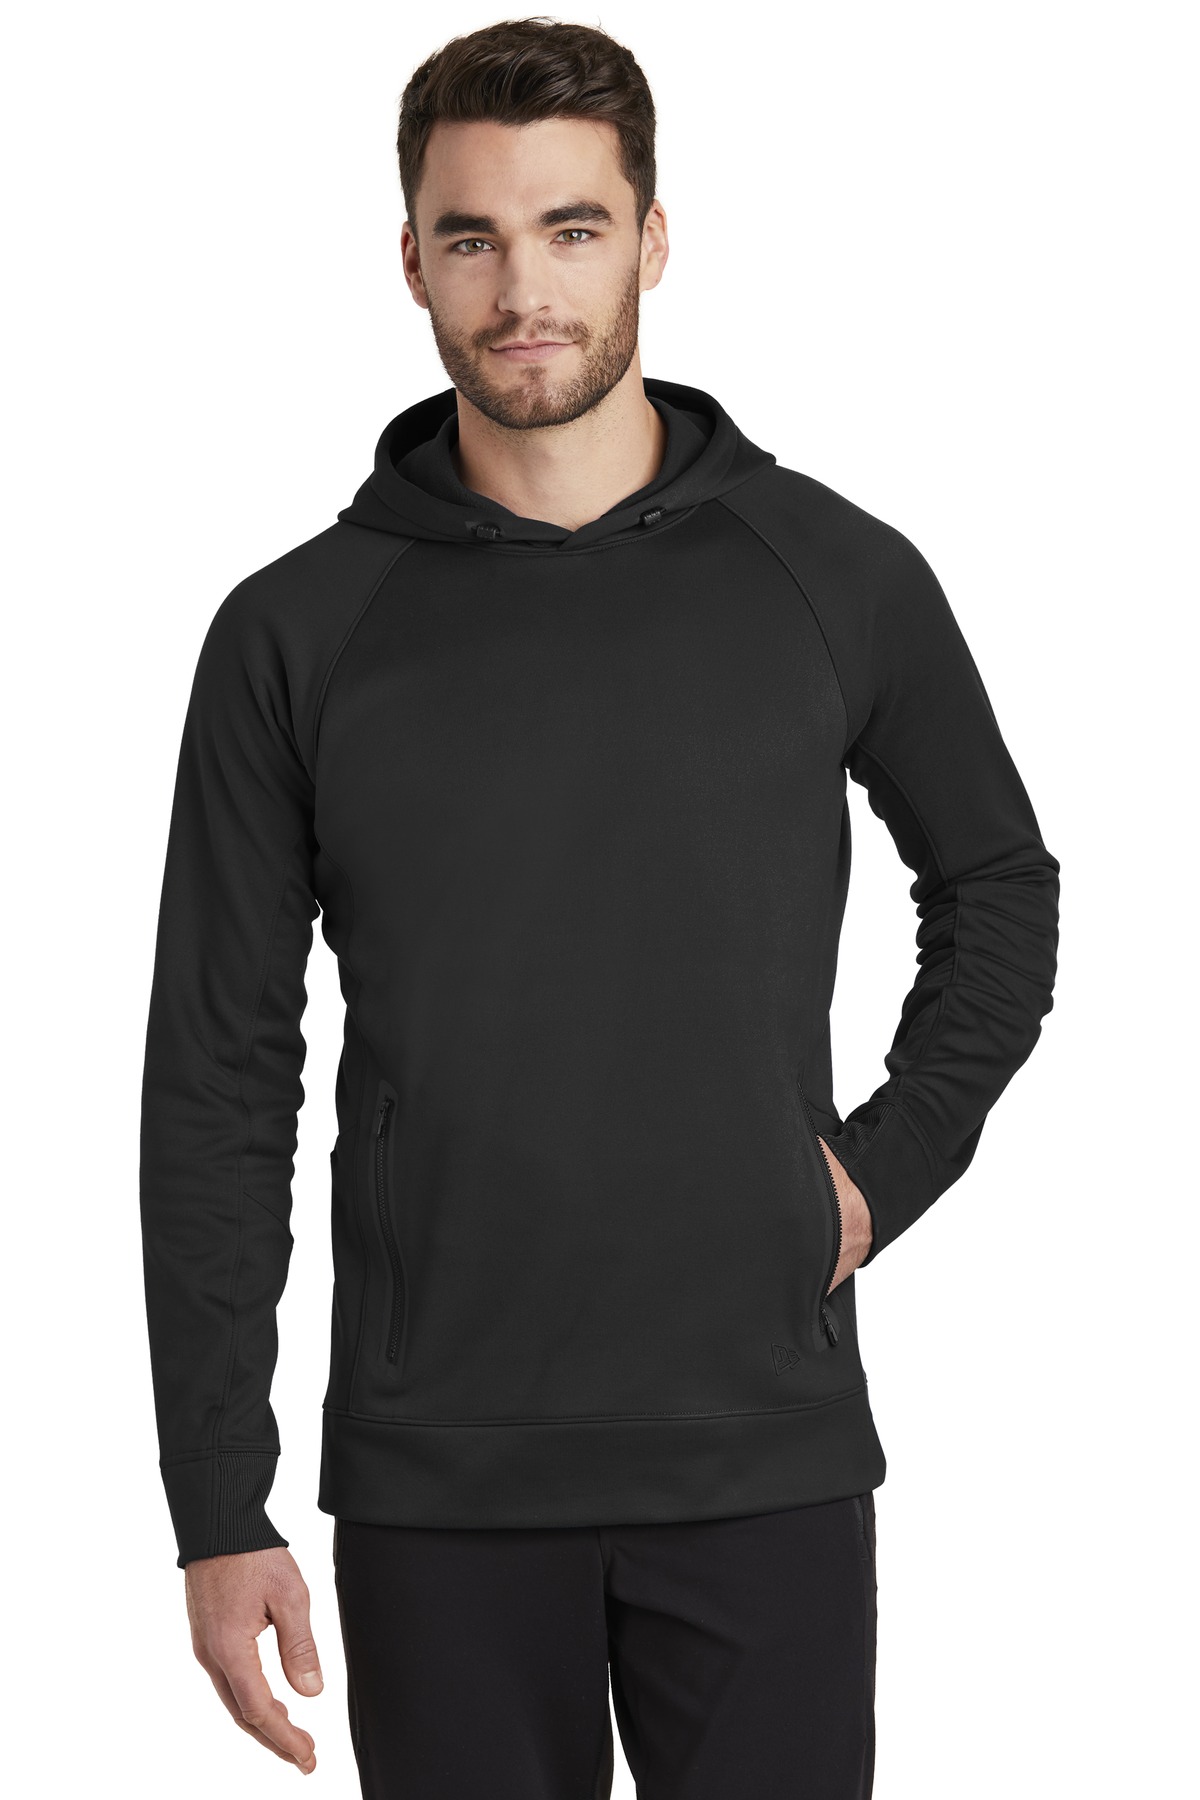 New Era ® Venue Fleece Pullover Hoodie. NEA520 - Custom Shirt Shop